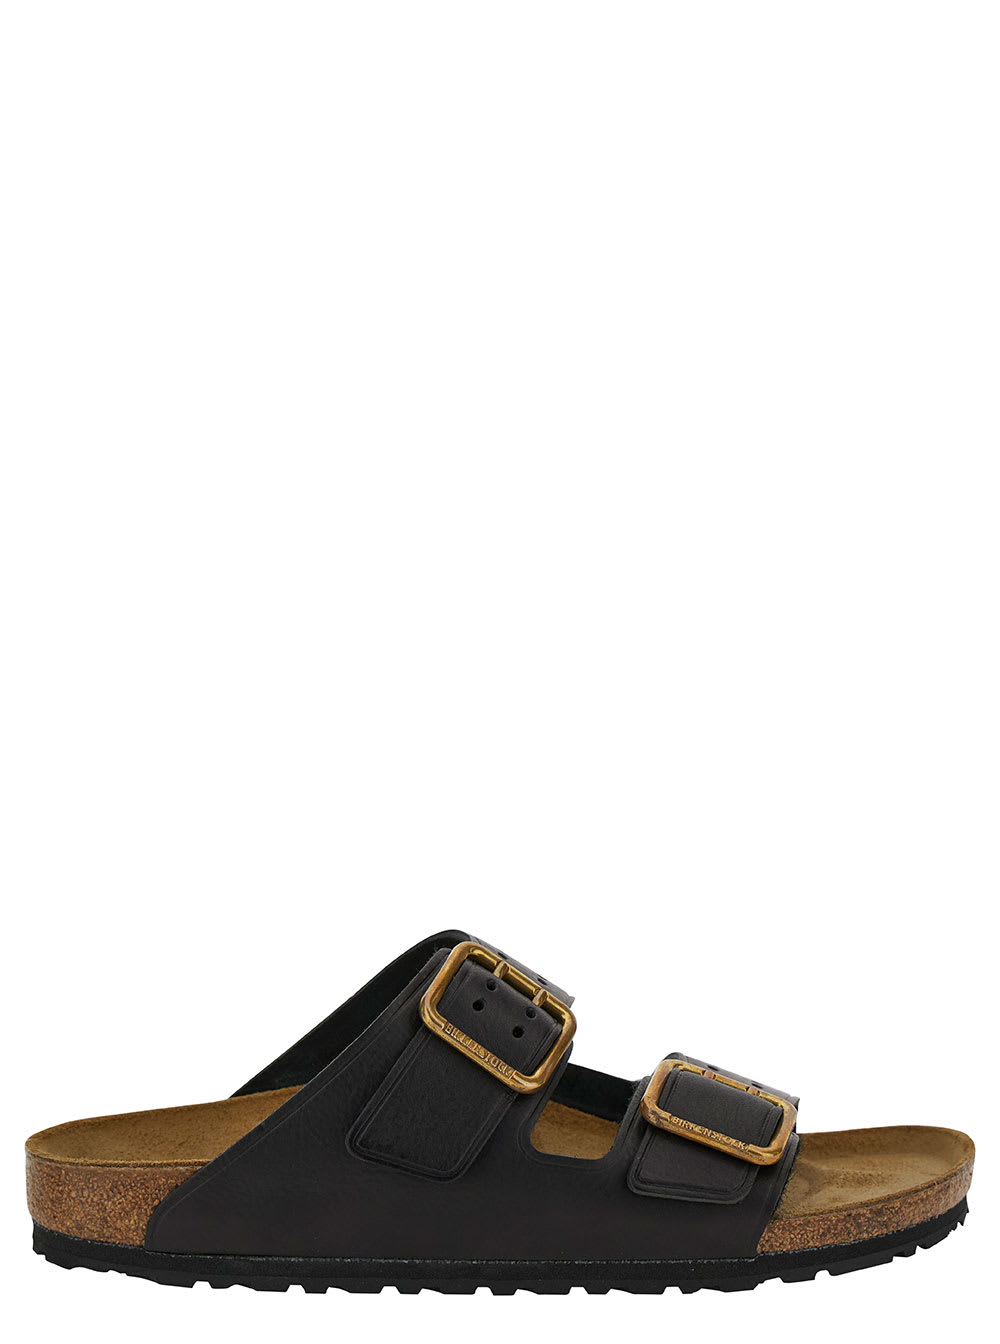 Birkenstock Arizona Black Slip-on Sneakers With Branded Buckles In Leather Man